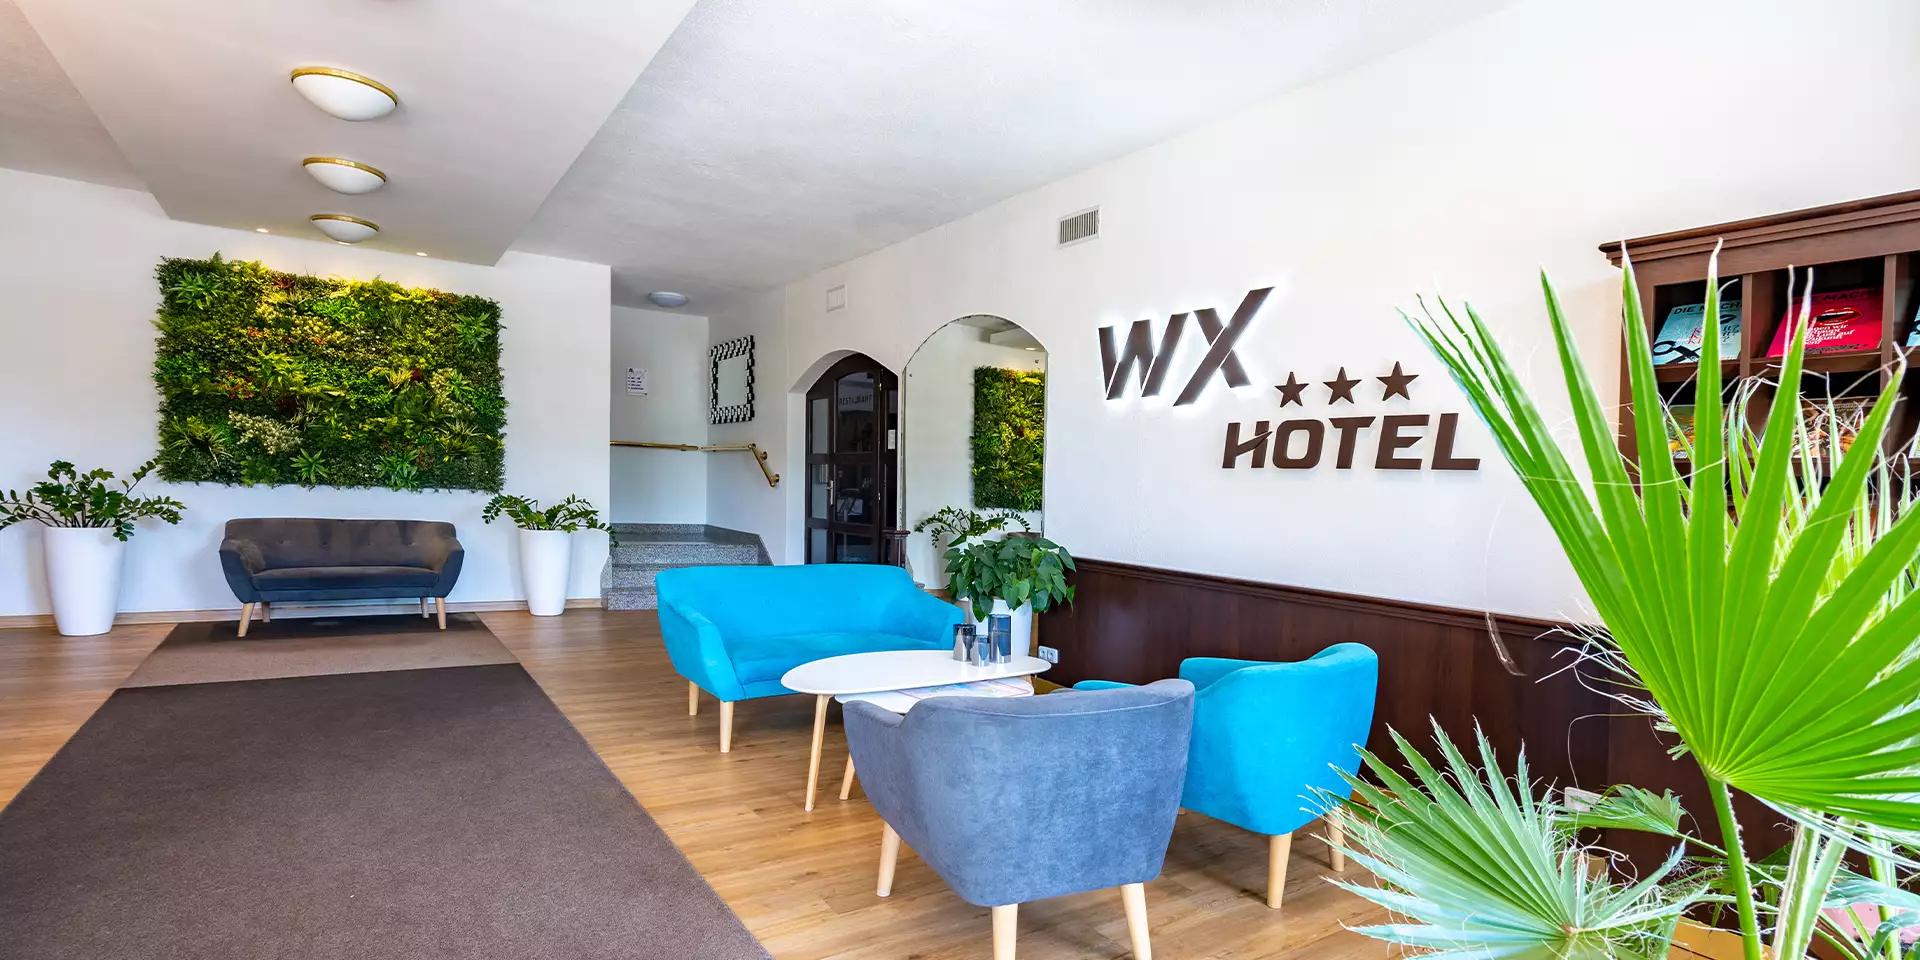 WX Hotel reception